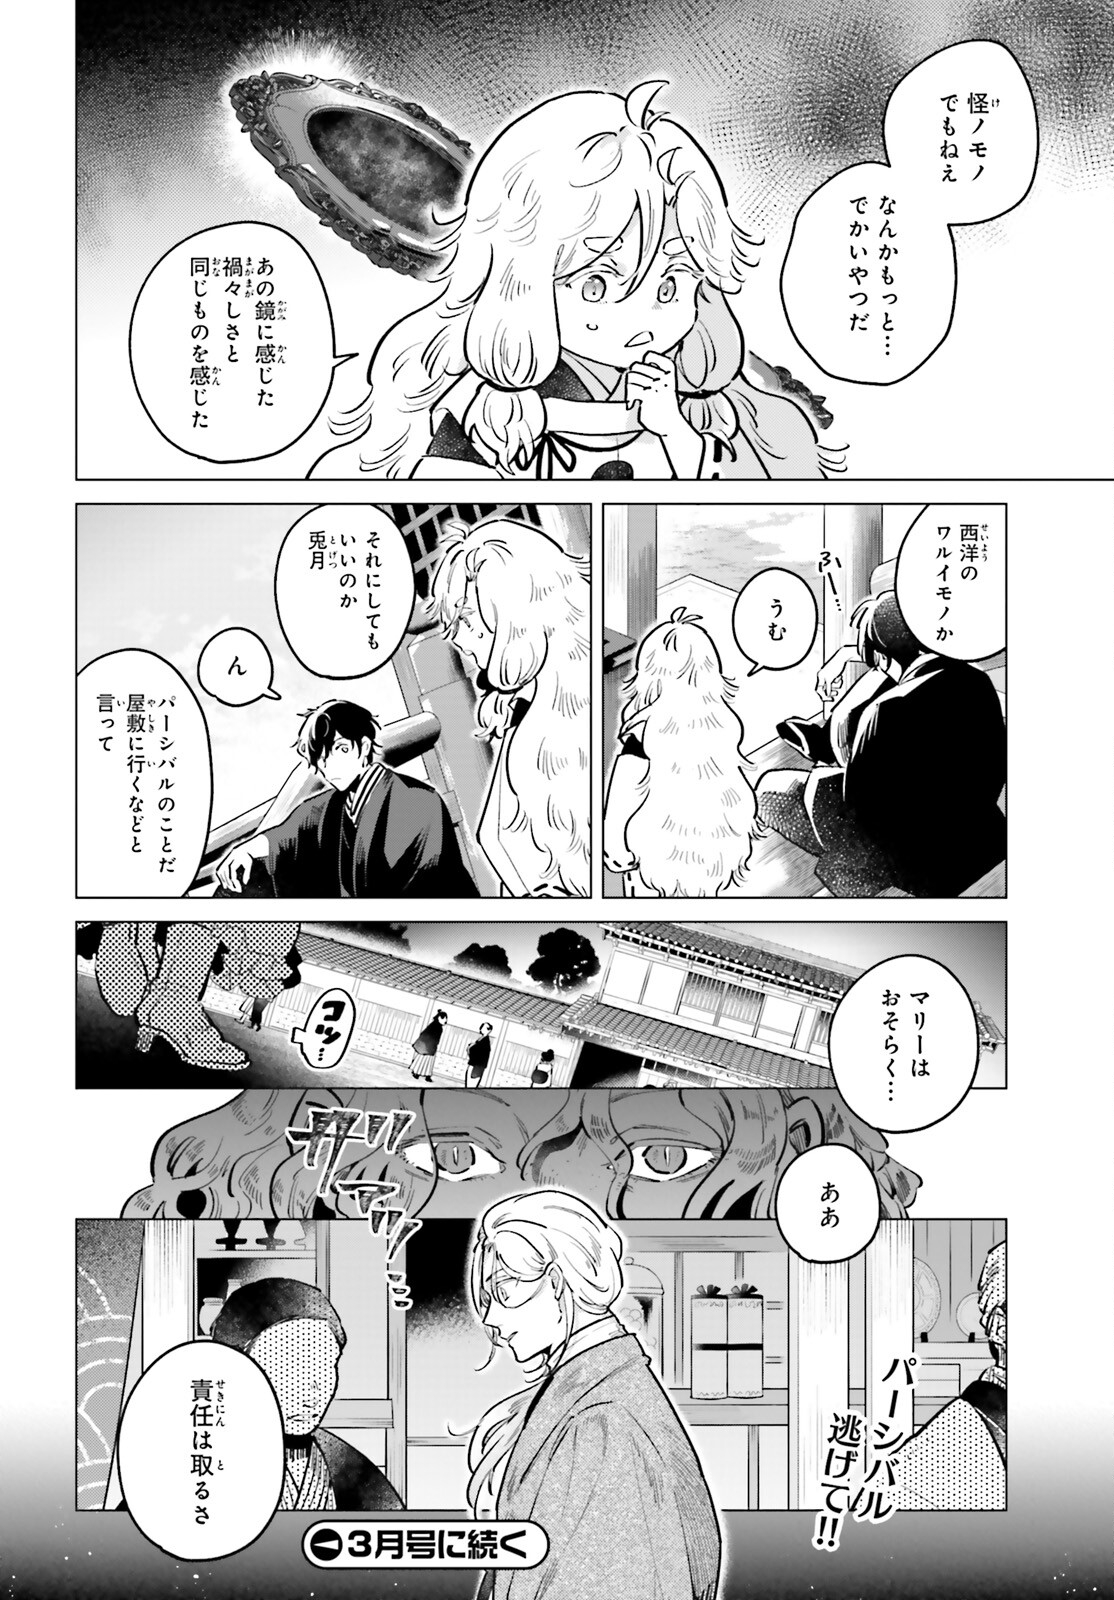 Kamisama no Youjinbou - Chapter 14 - Page 25